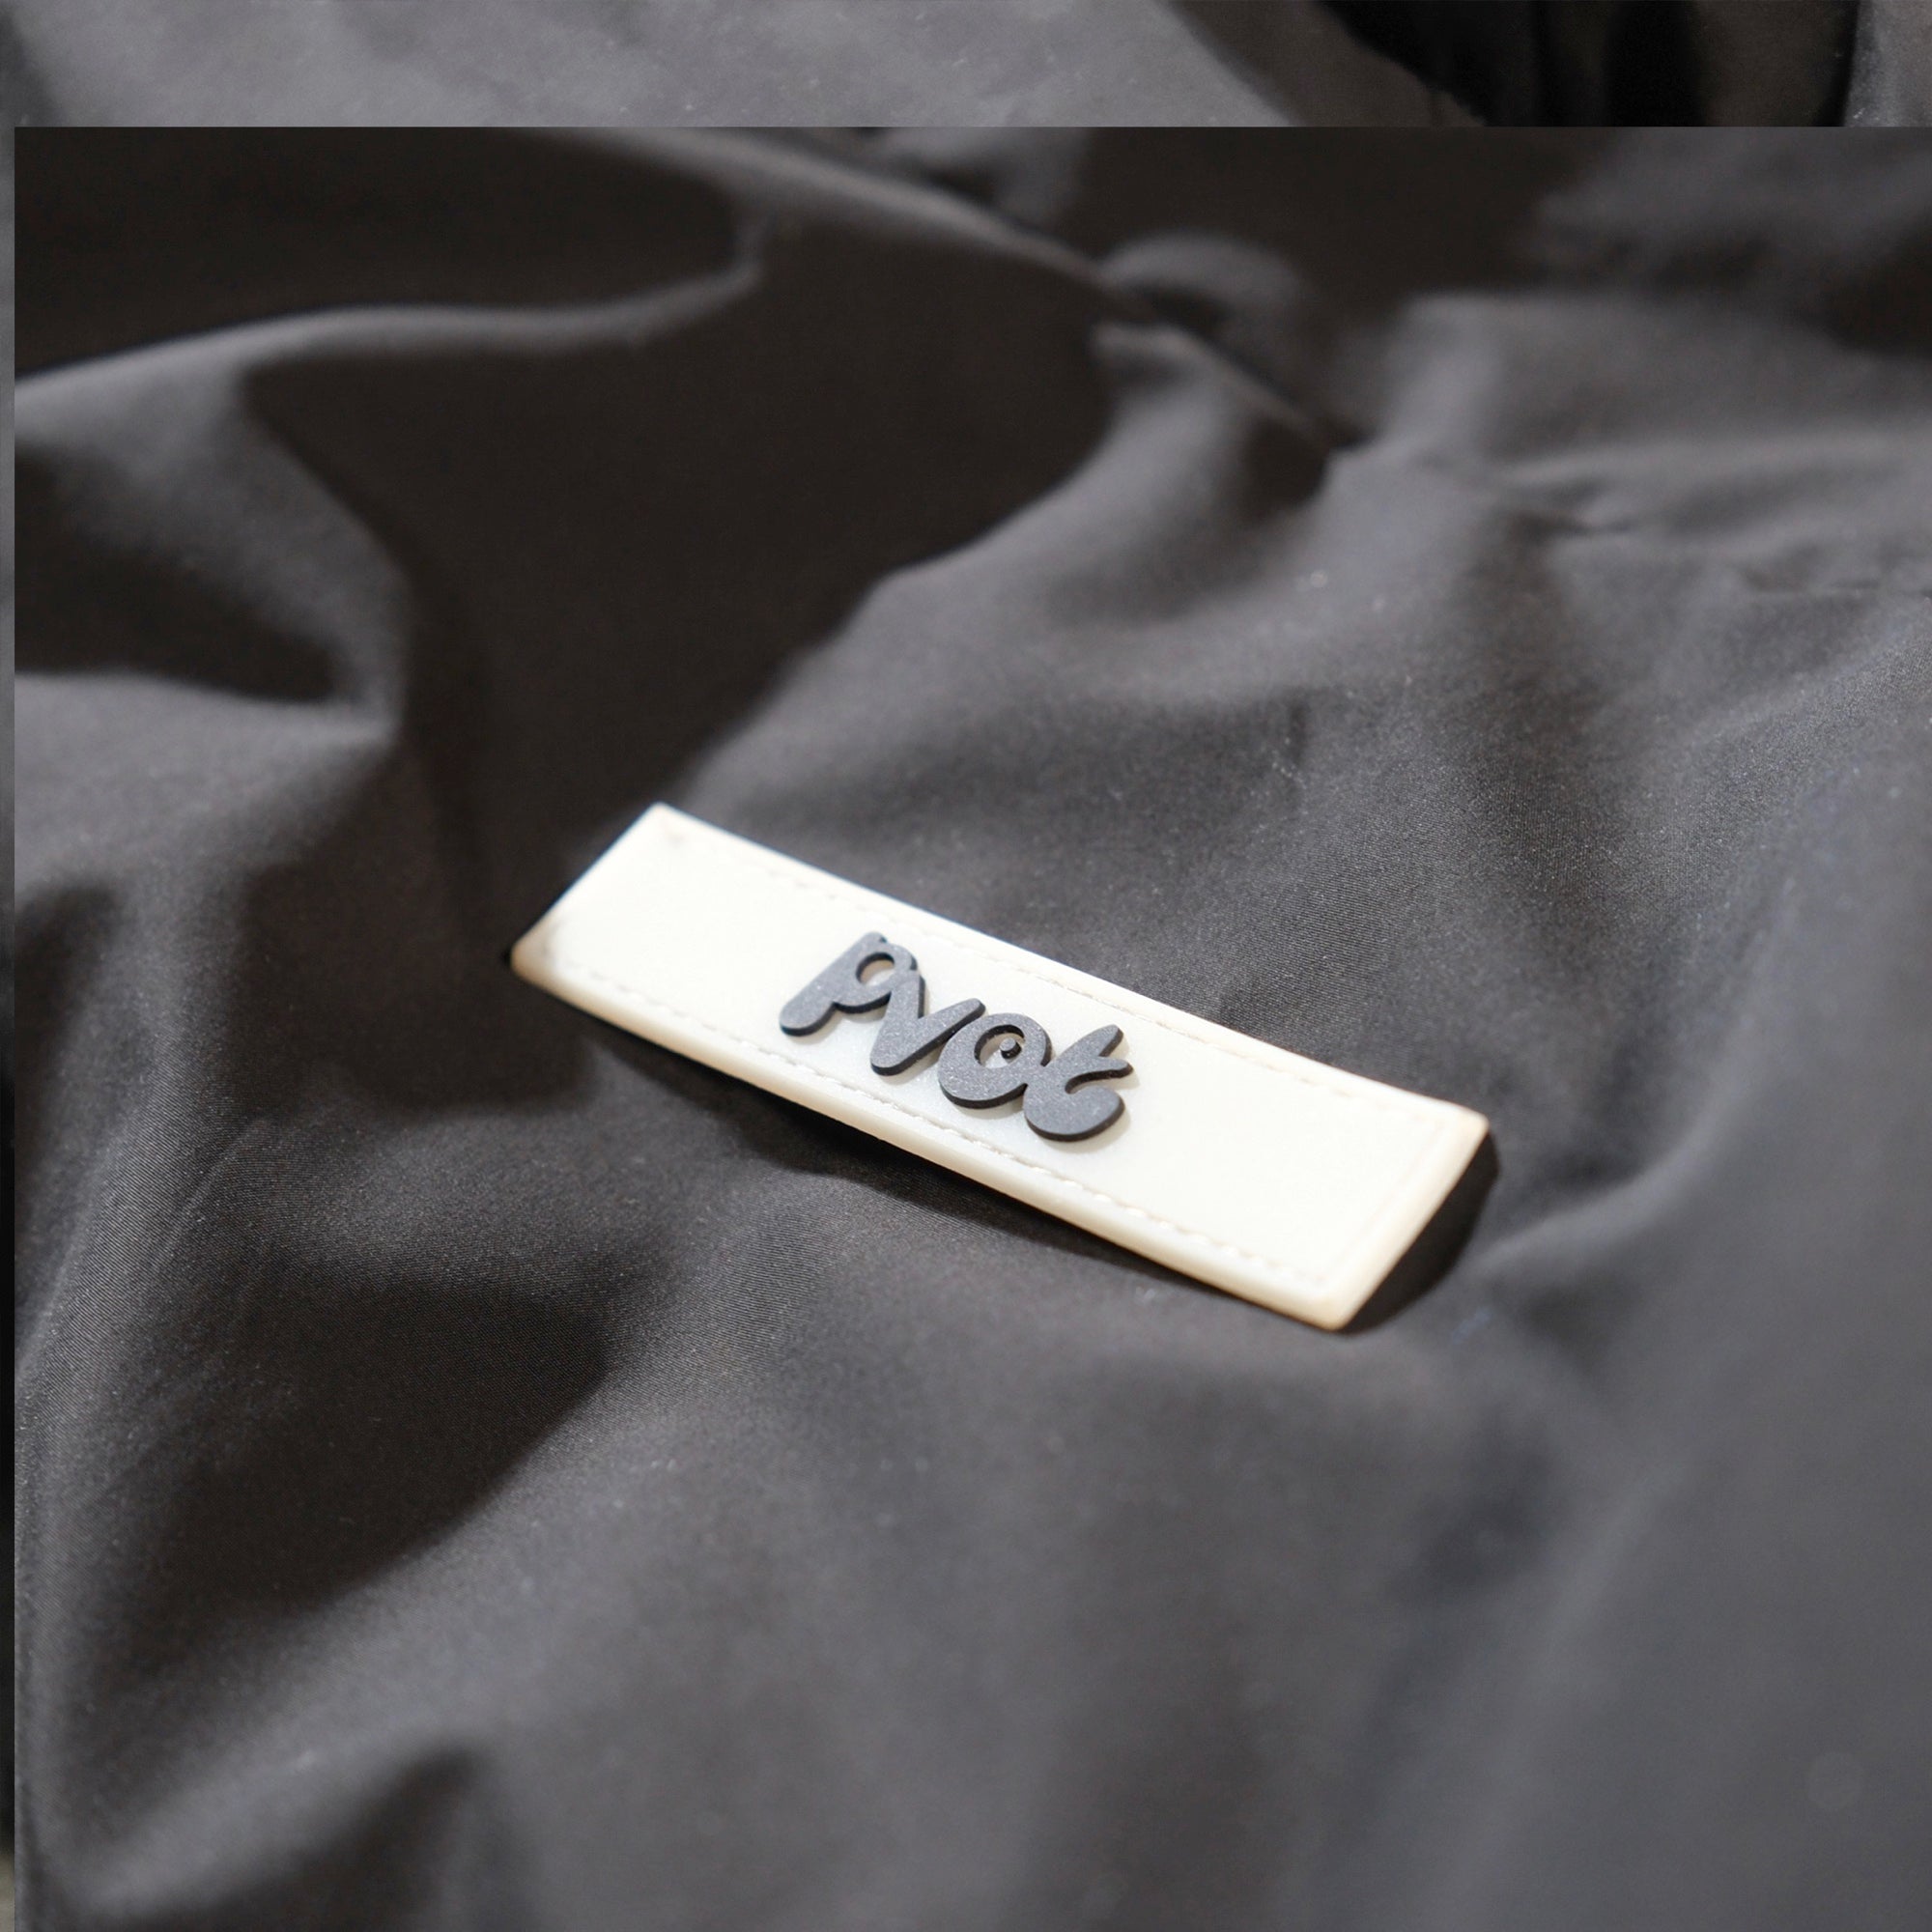 Pvot Premium Puffer Jacket (Black)